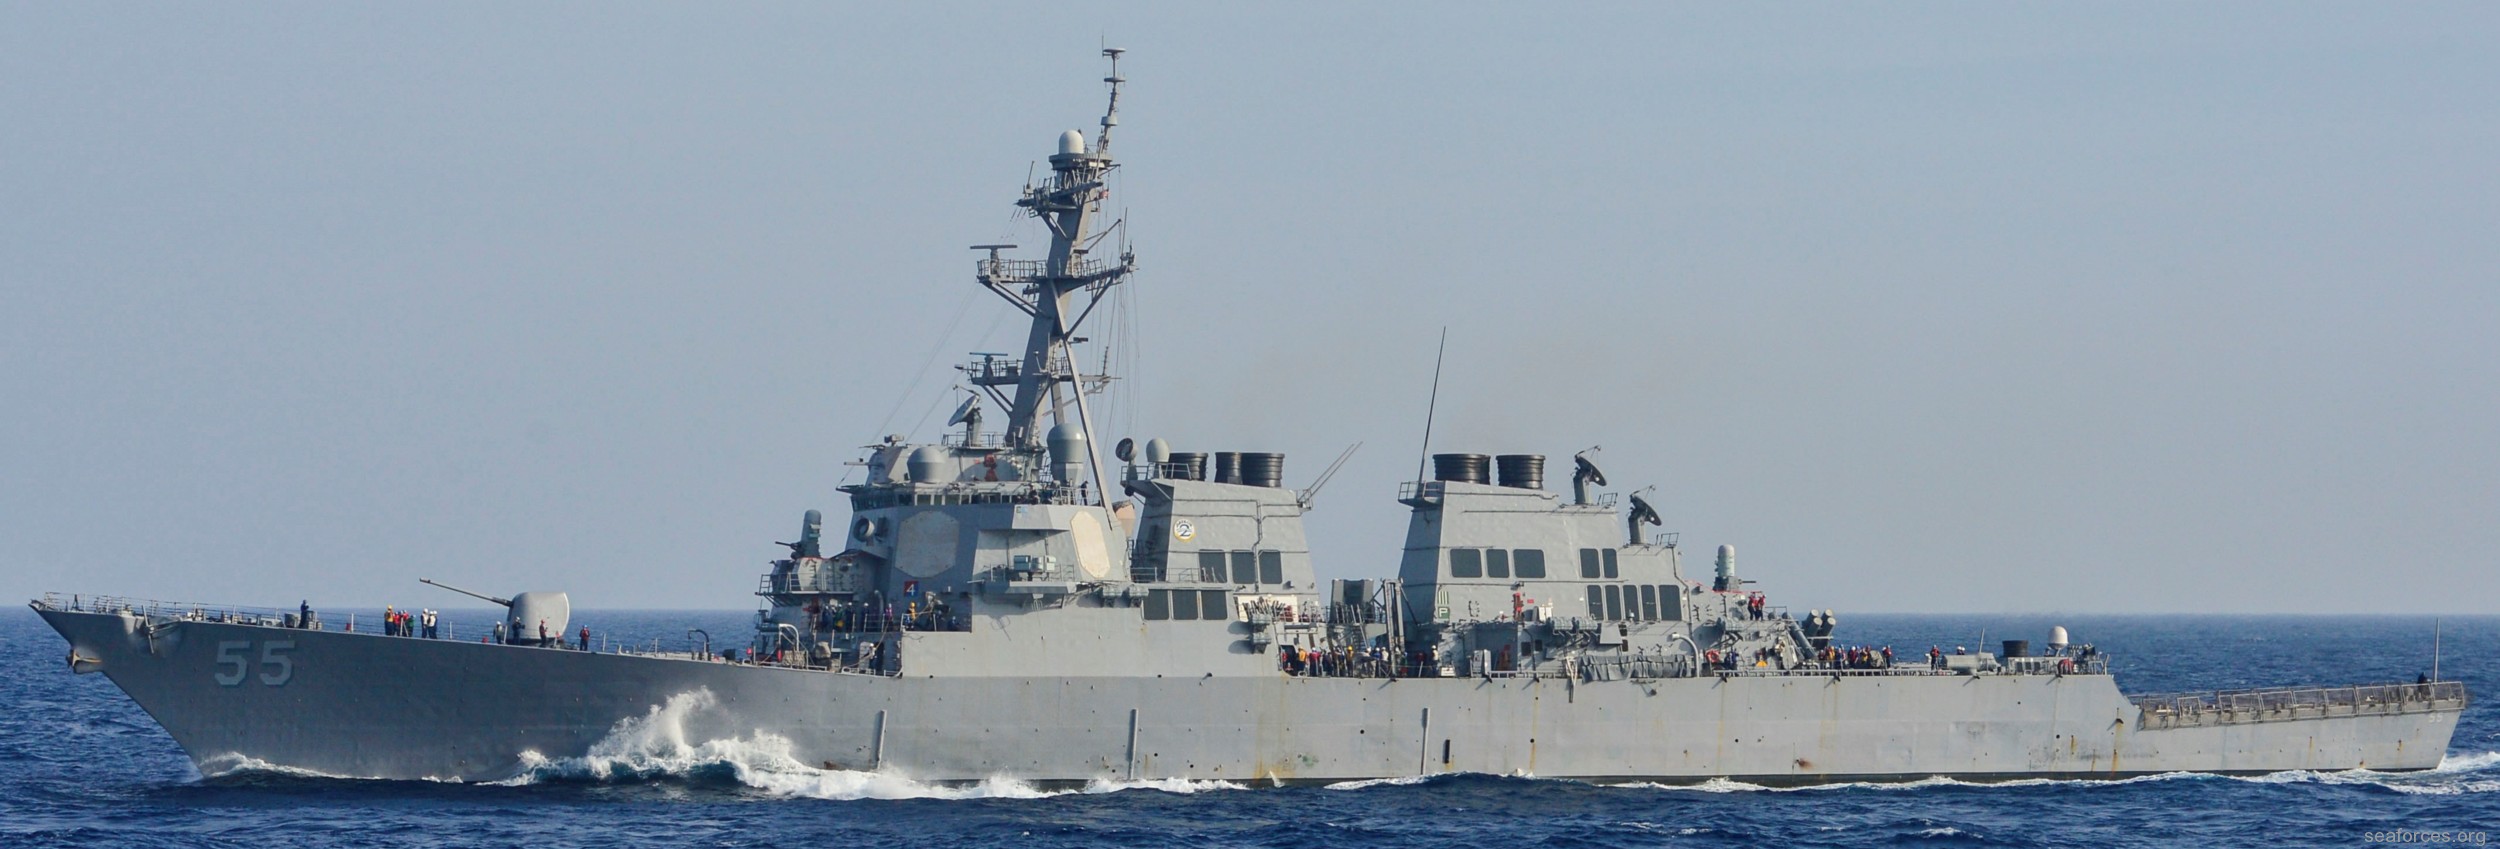 ddg-55 uss stout guided missile destroyer us navy 56 mediterranean sea